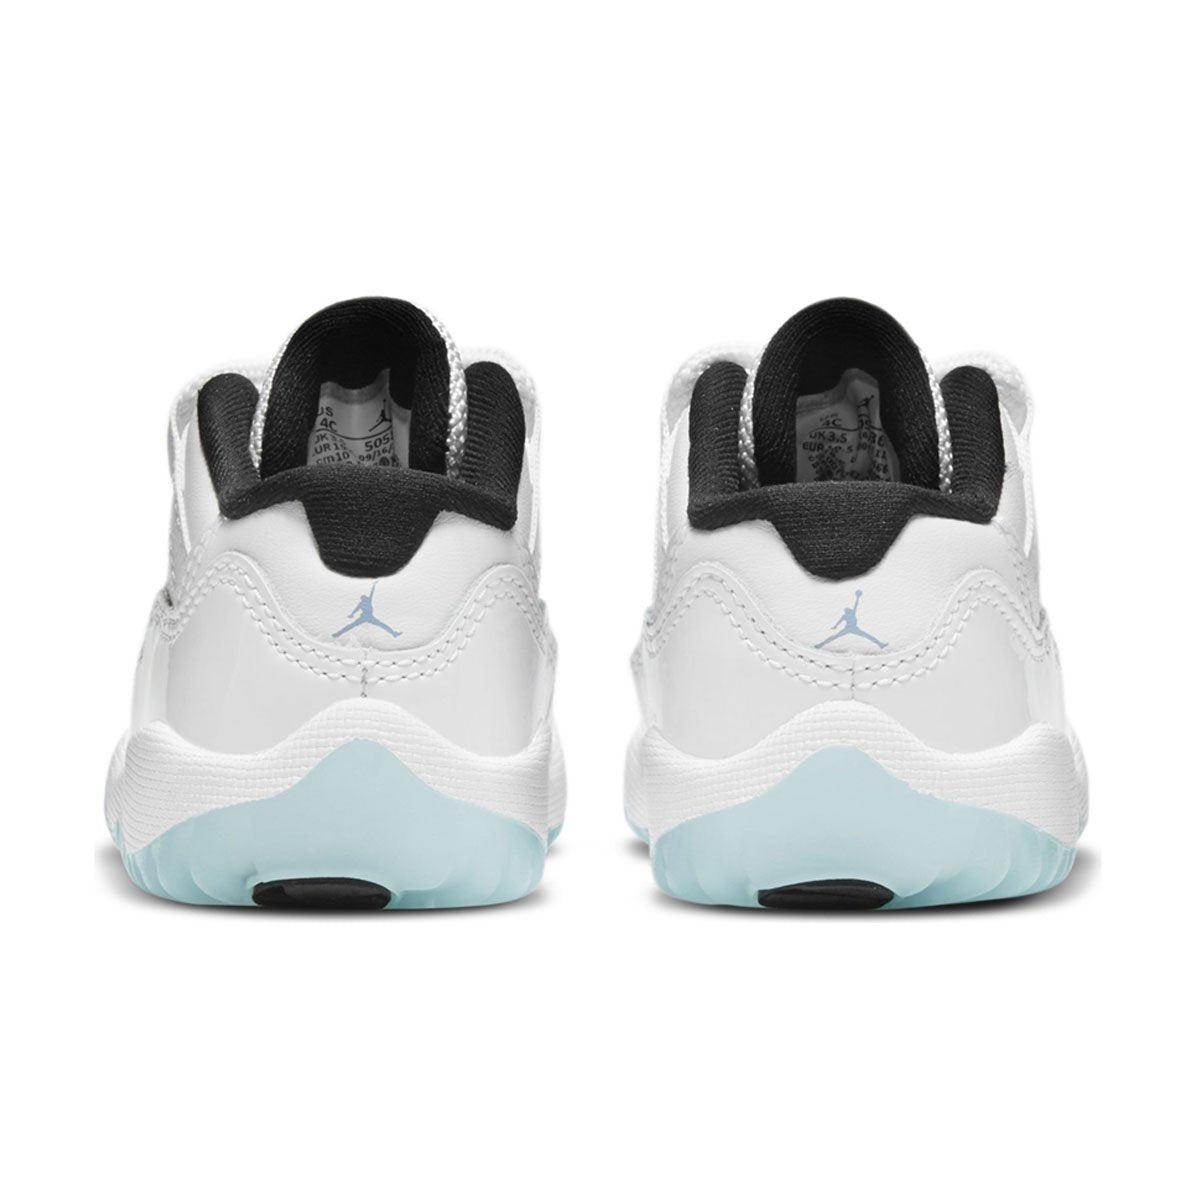 Air Jordan 11 Retro Low Baby/Toddler Shoe